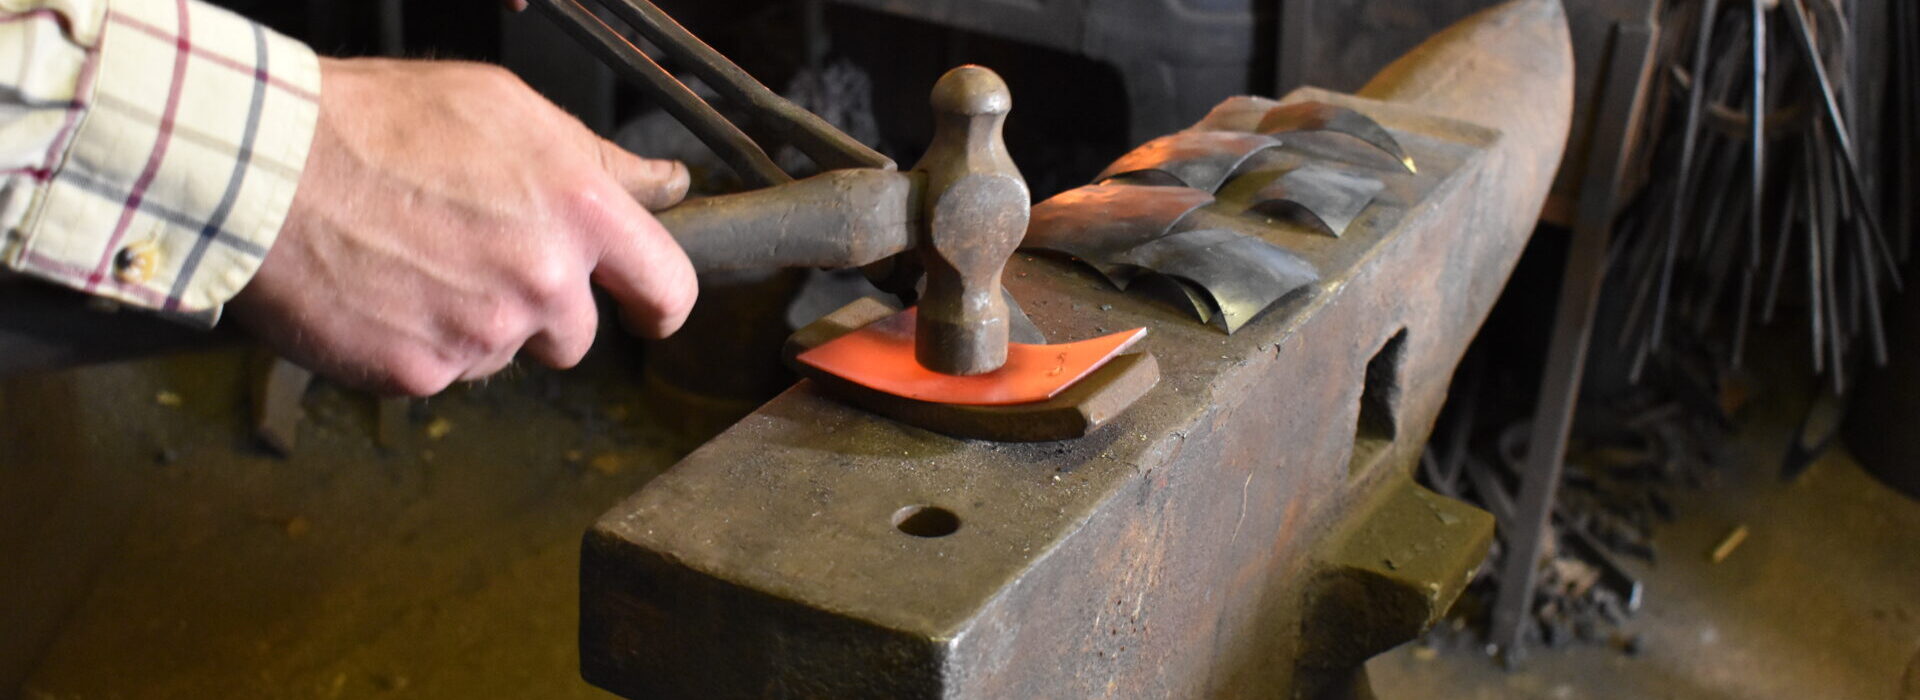 Making bespoke metalwork on the blacksmith's anvil.